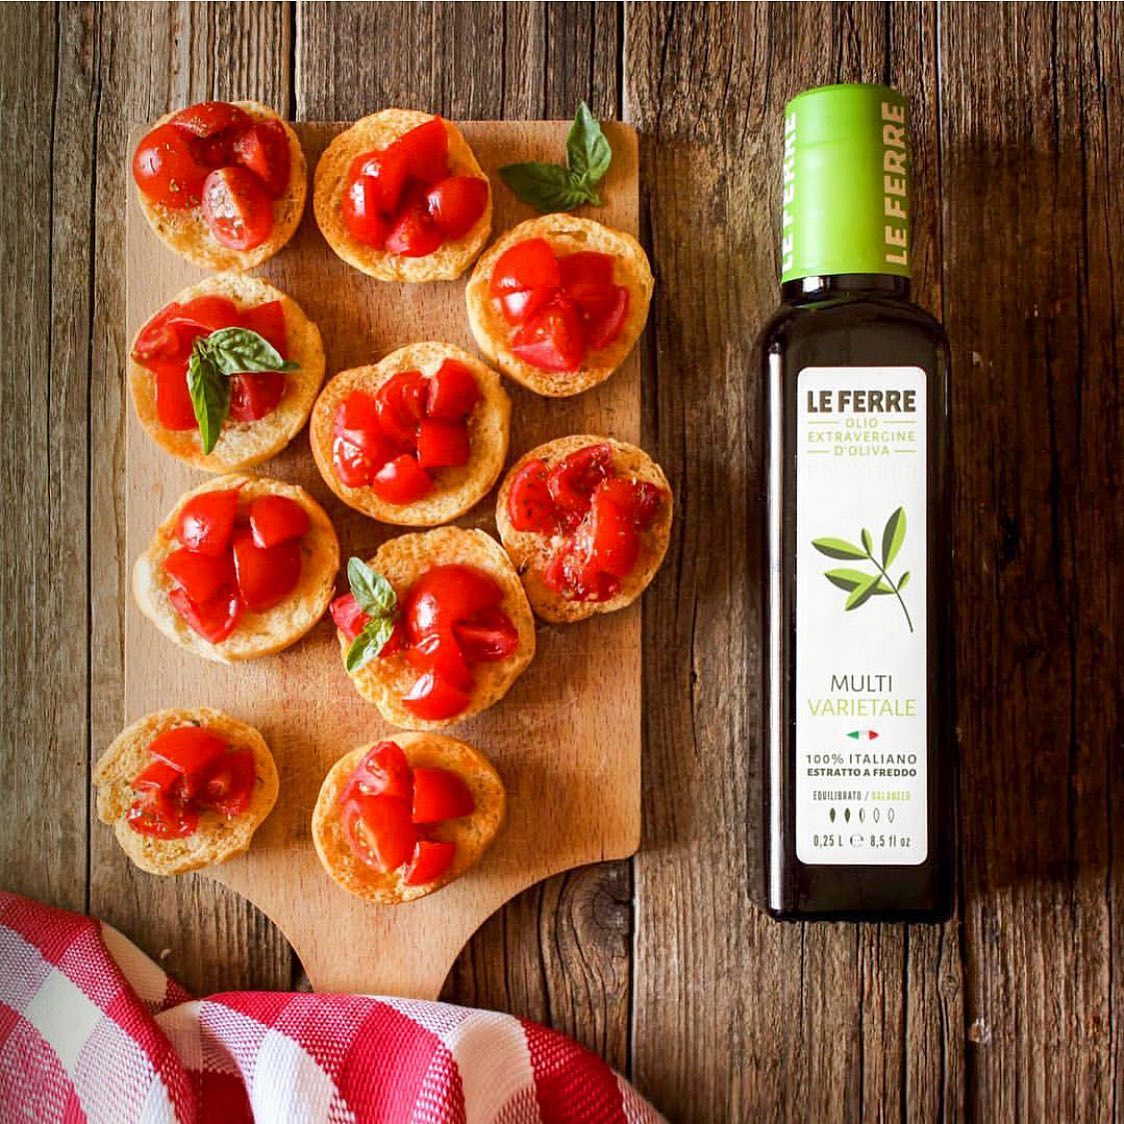 Buy authentic Italian olive oil